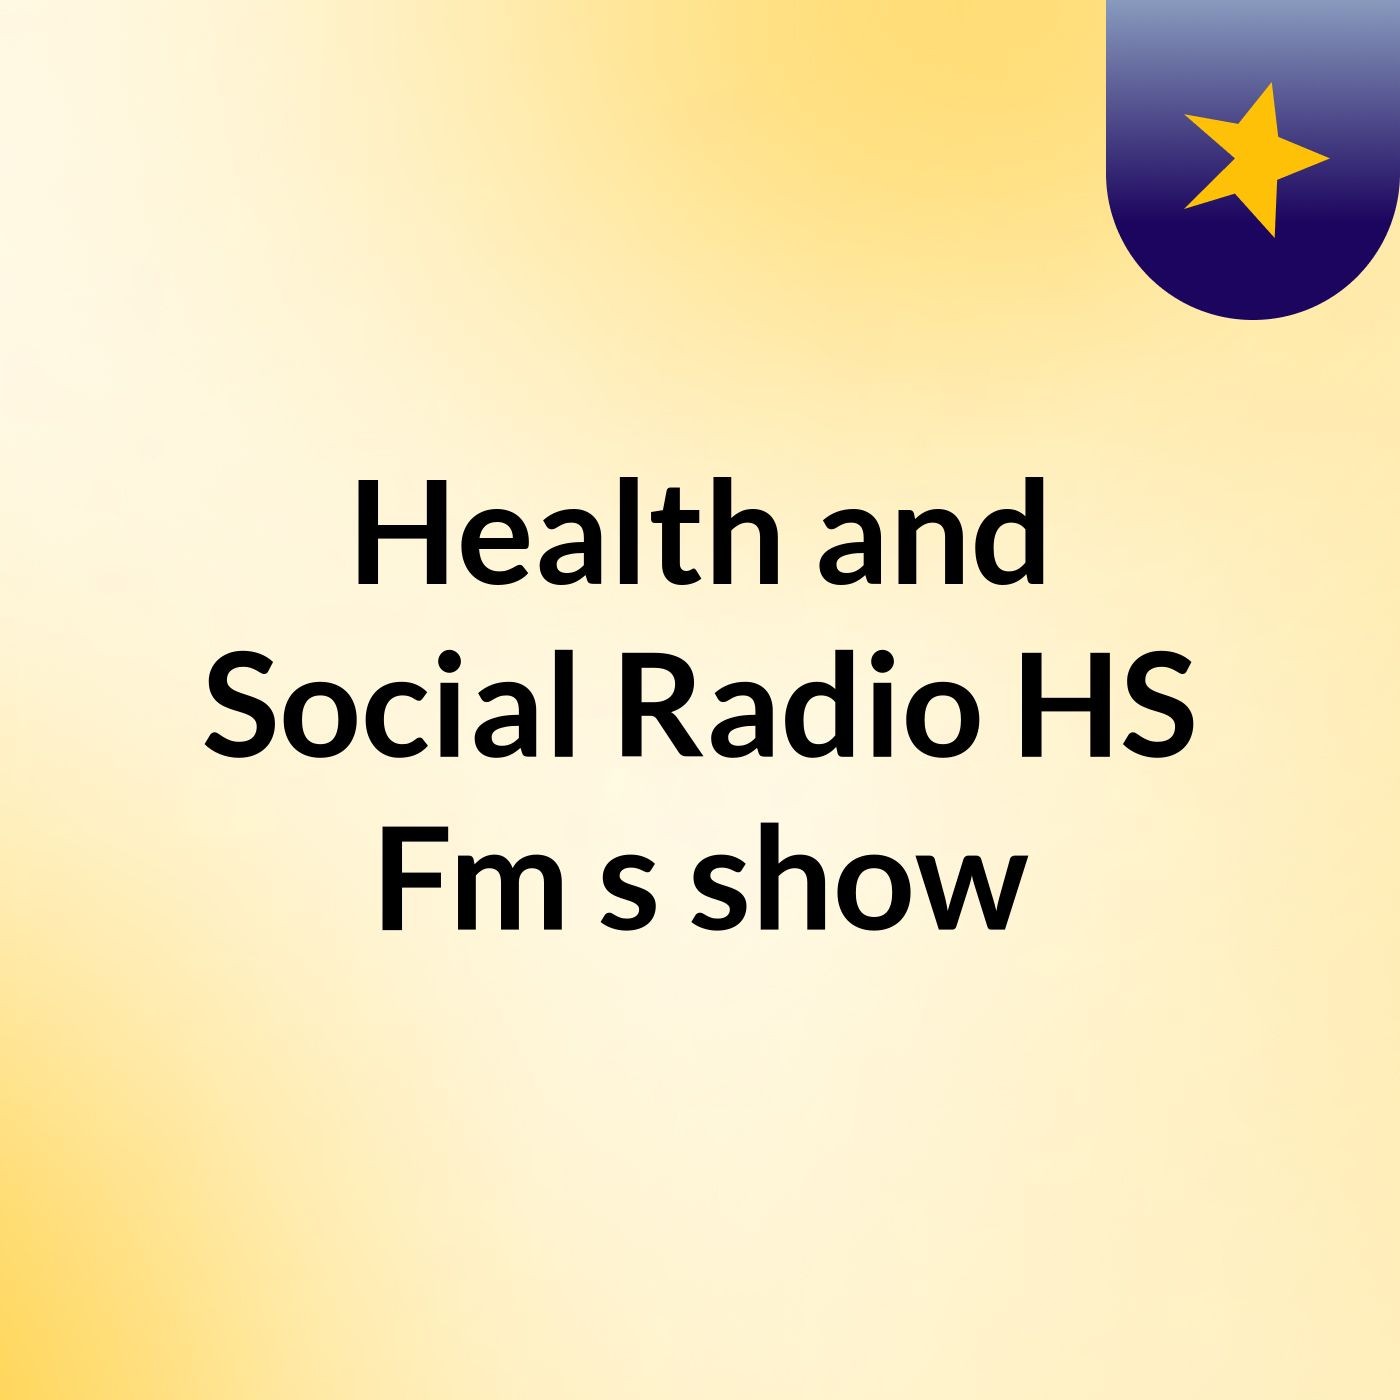 Health and Social Radio HS Fm's show